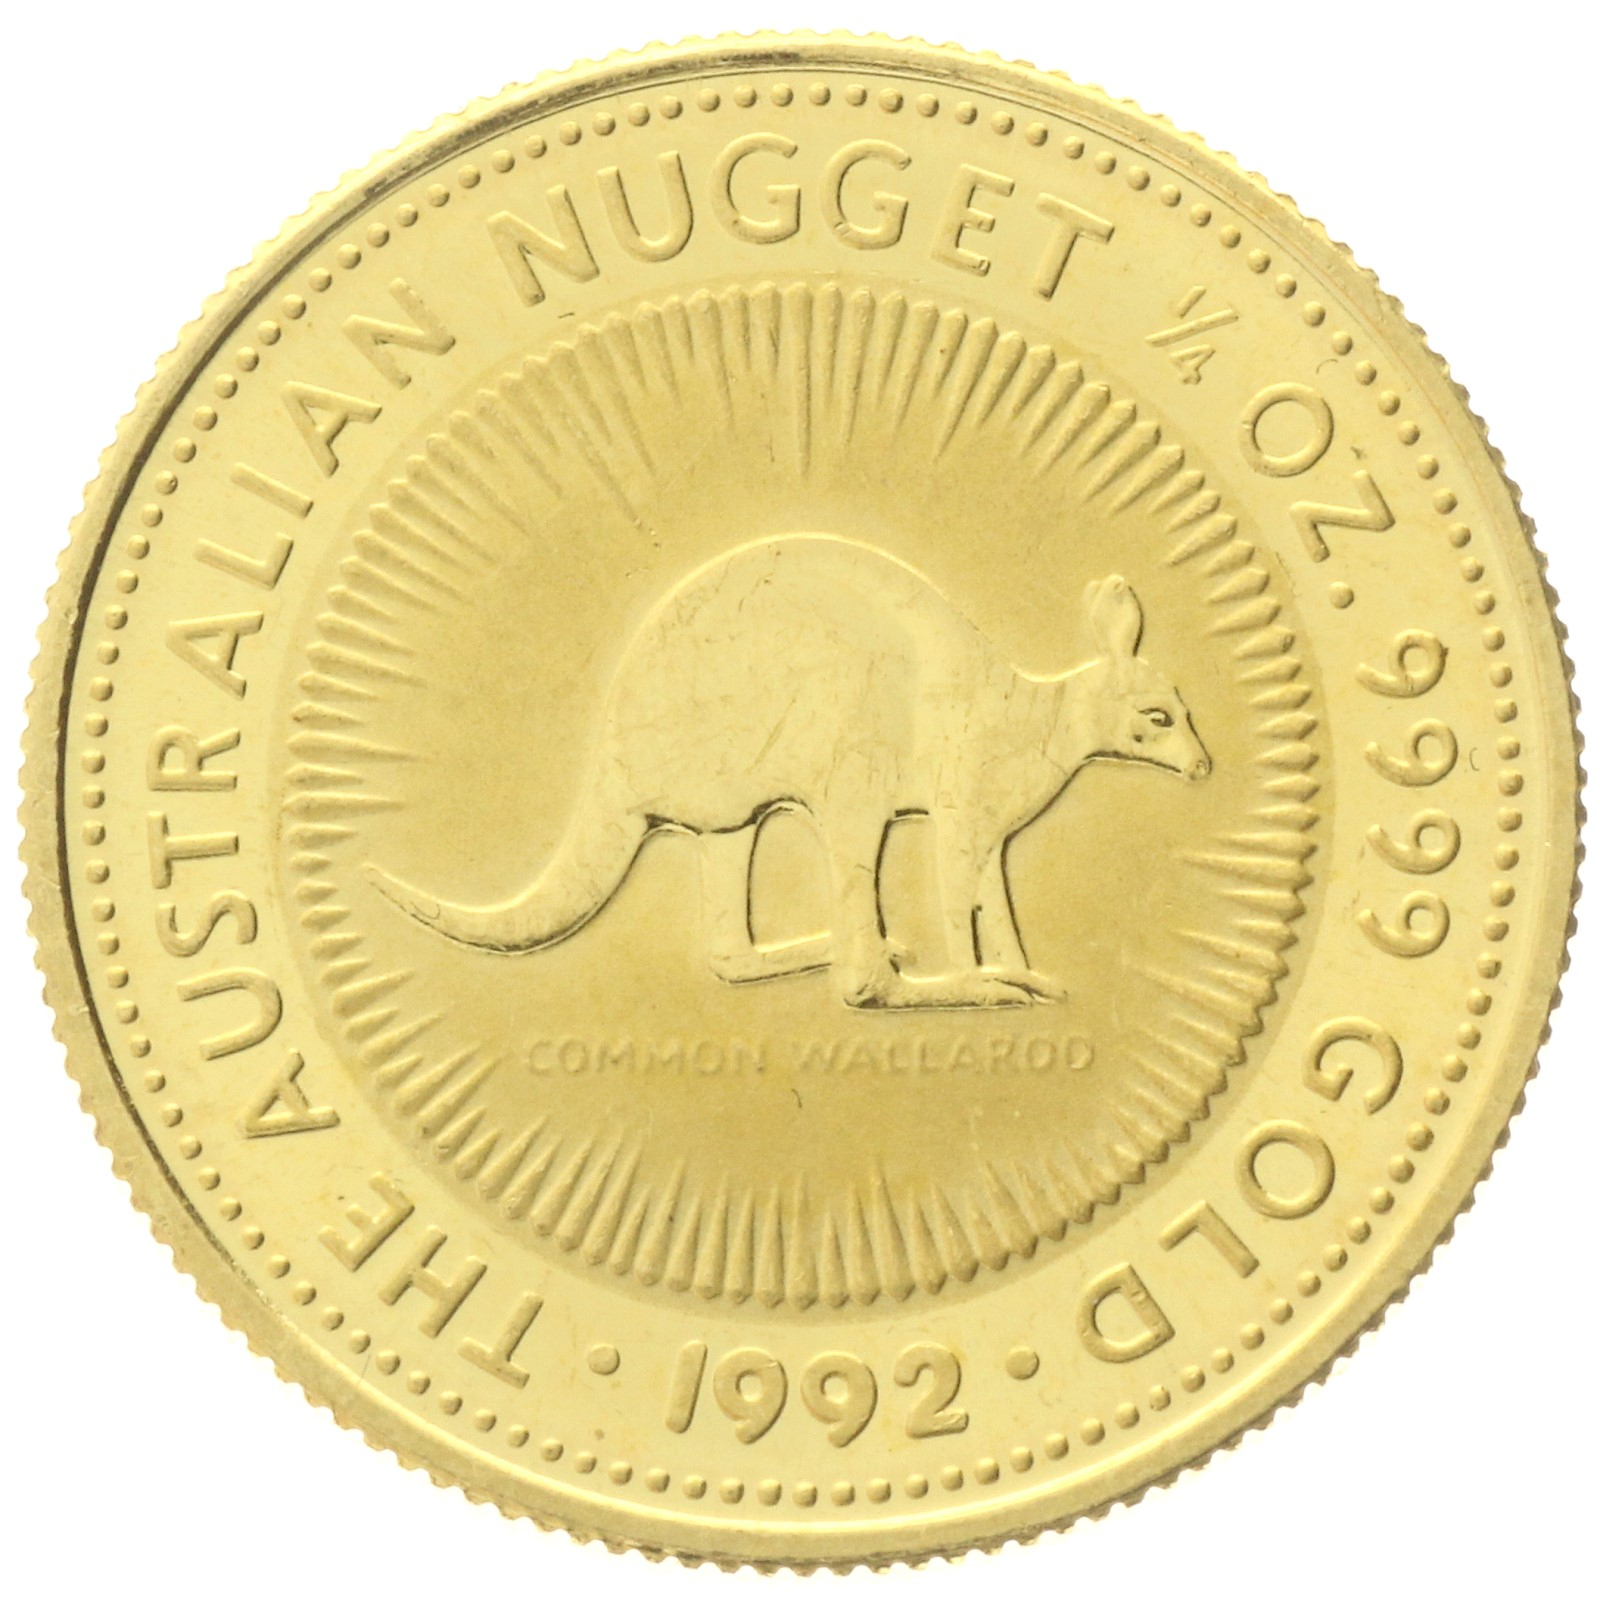 Australia - 25 dollars - 1992 - Australian Nugget - 1/4oz